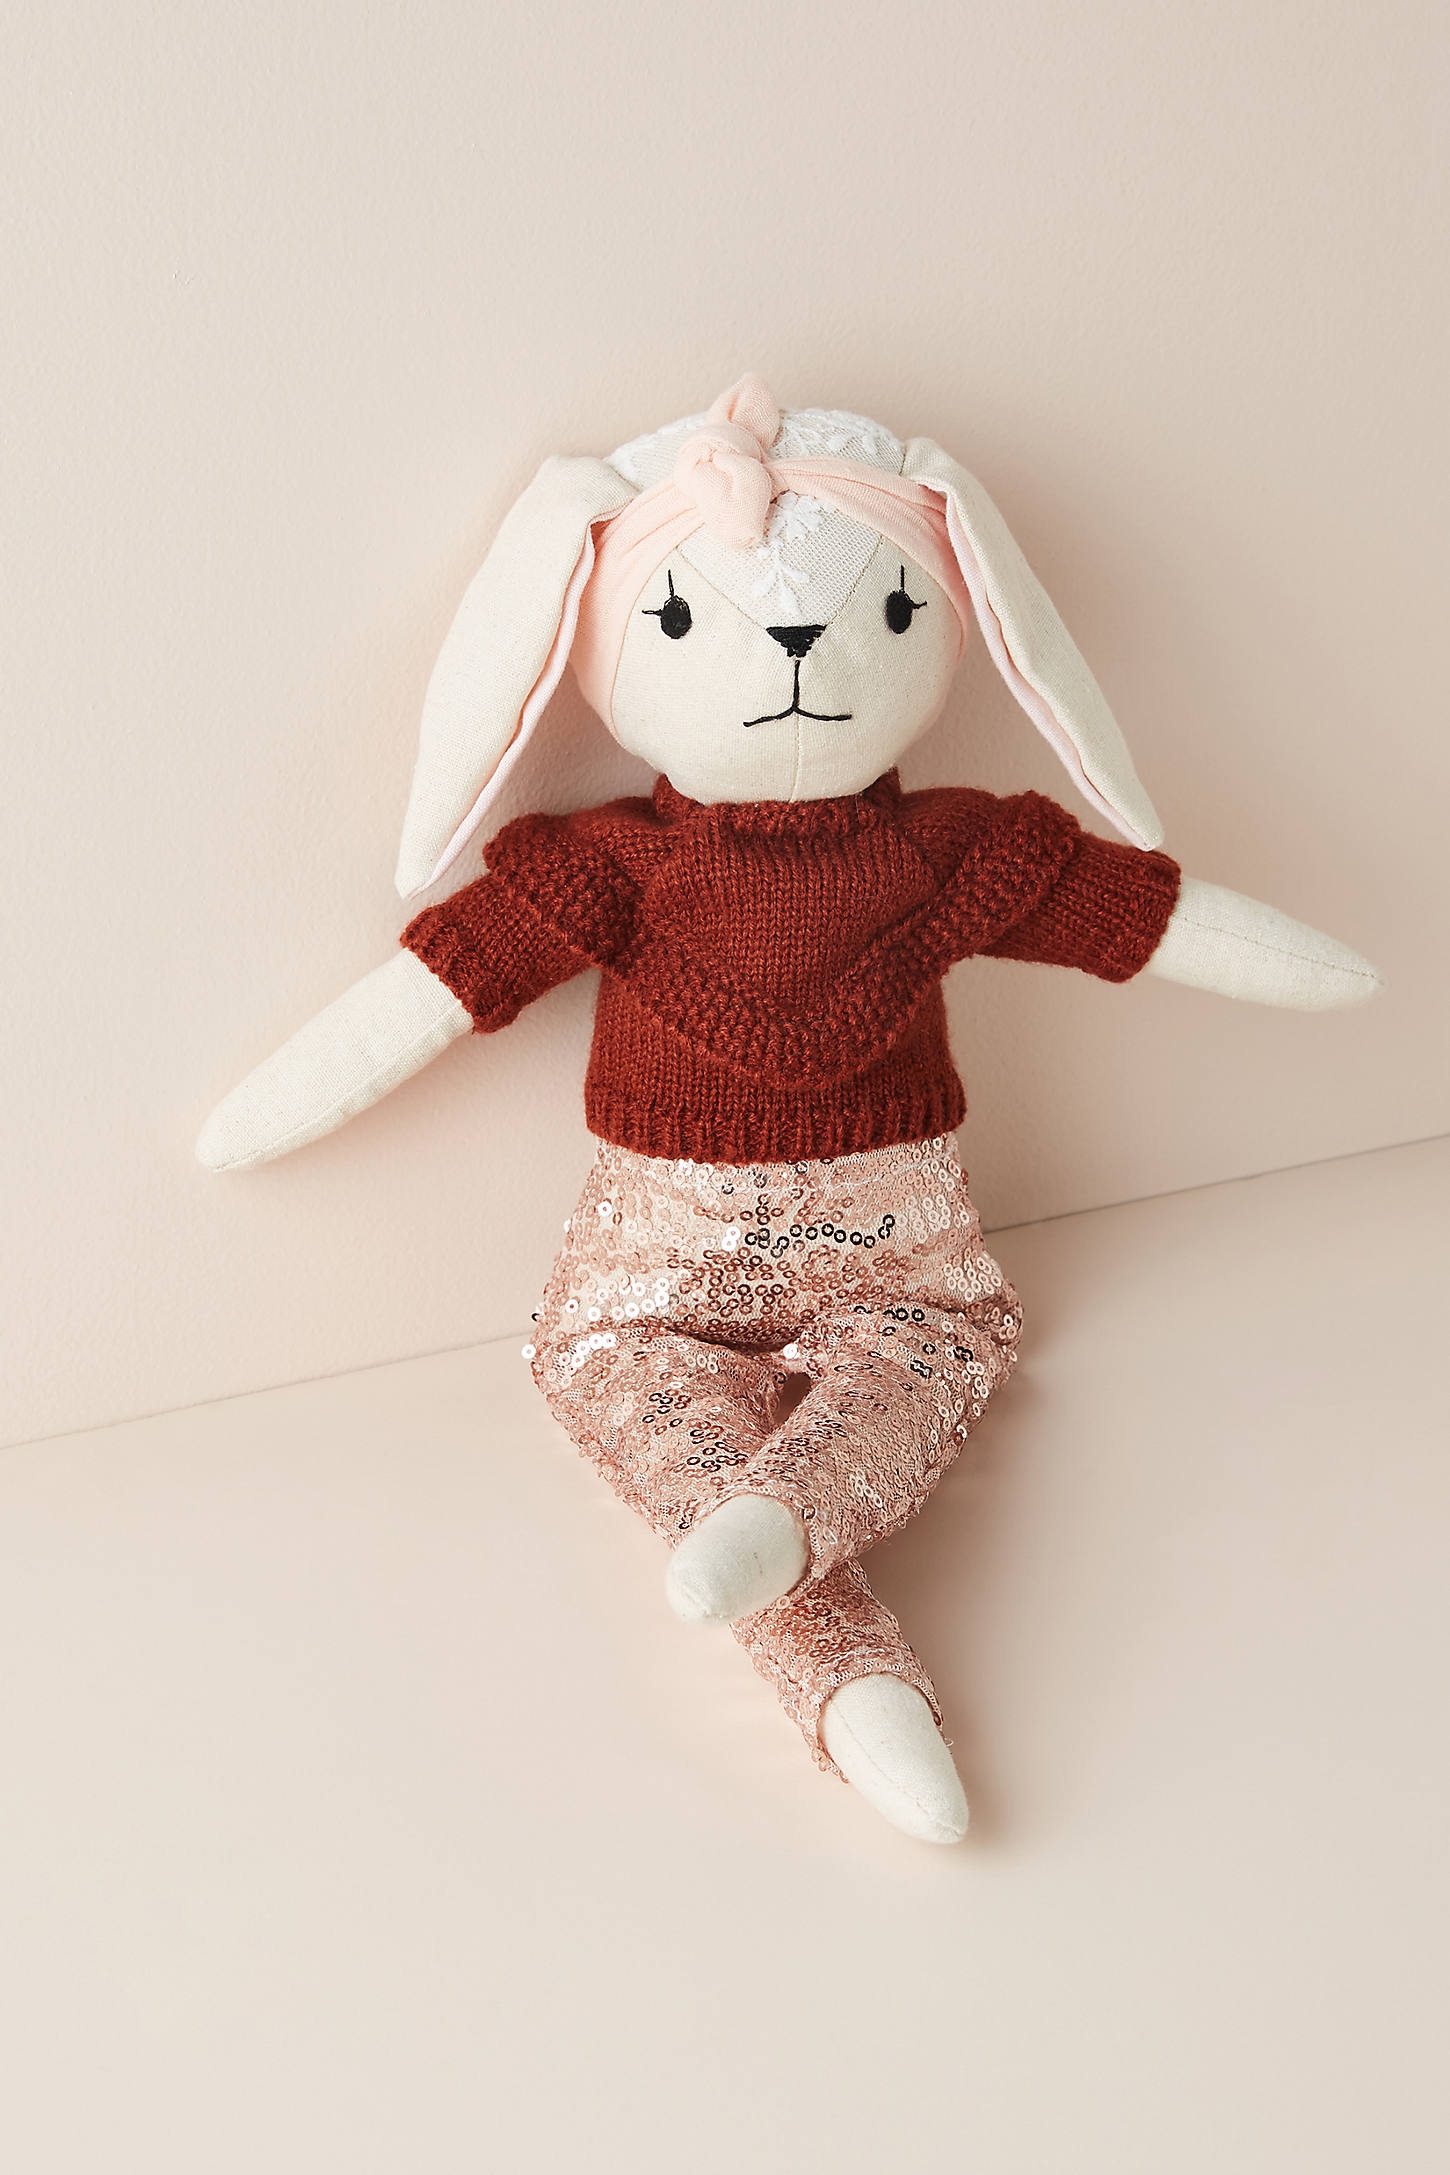 Wonderforest Girls Stuffed Animal - Rabbit - Image 0